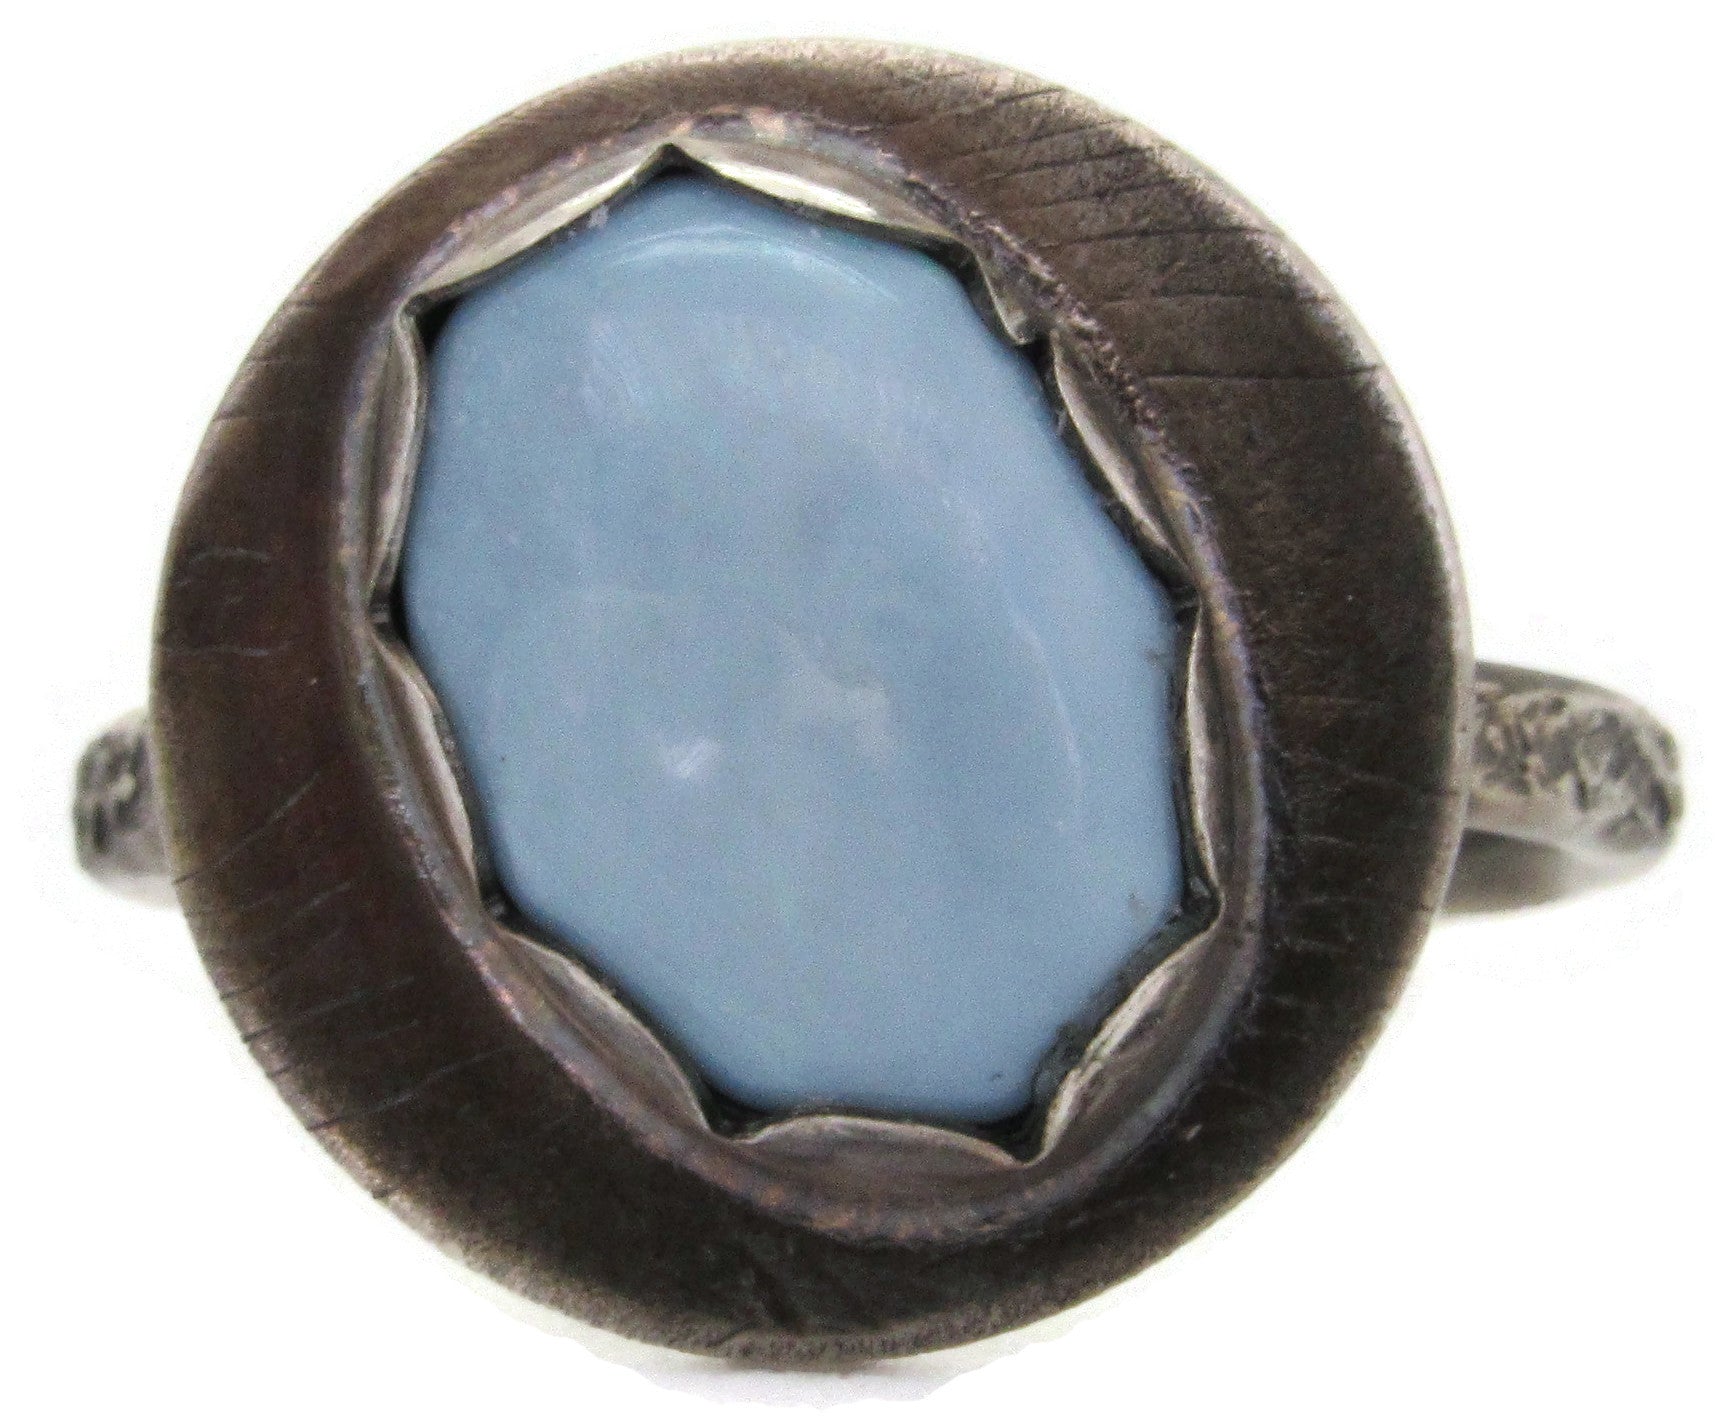 Petite Blue Opal Ring